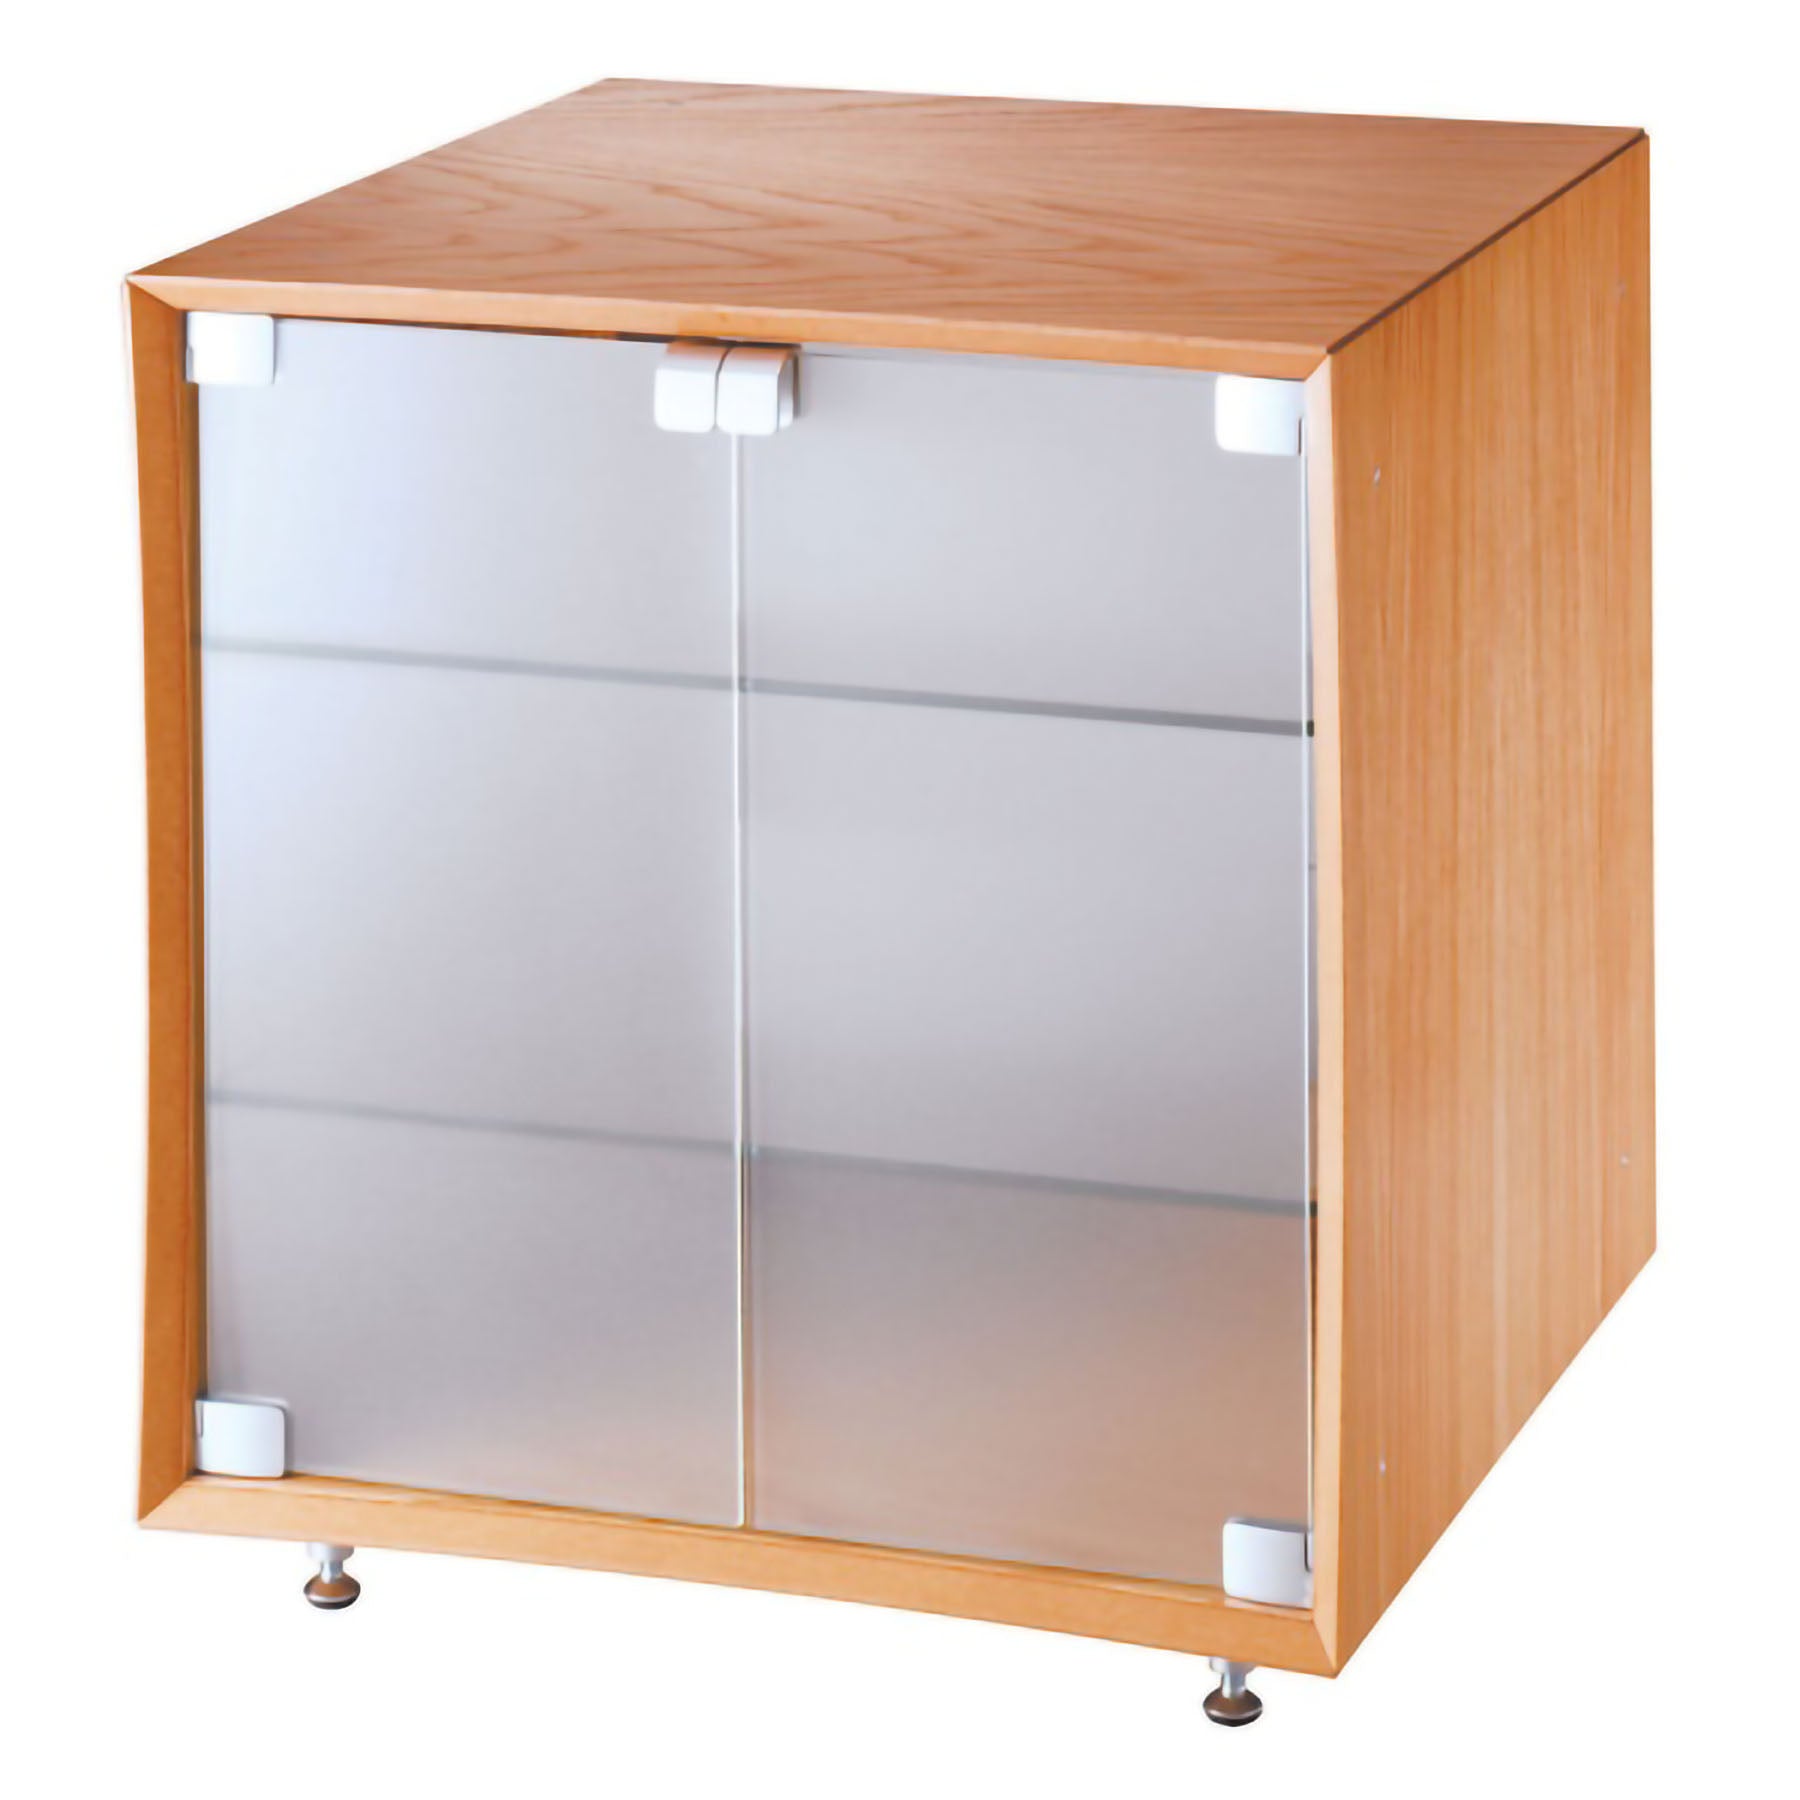 Quadraspire Hi-Fi QUBE Modular Storage Cabinet